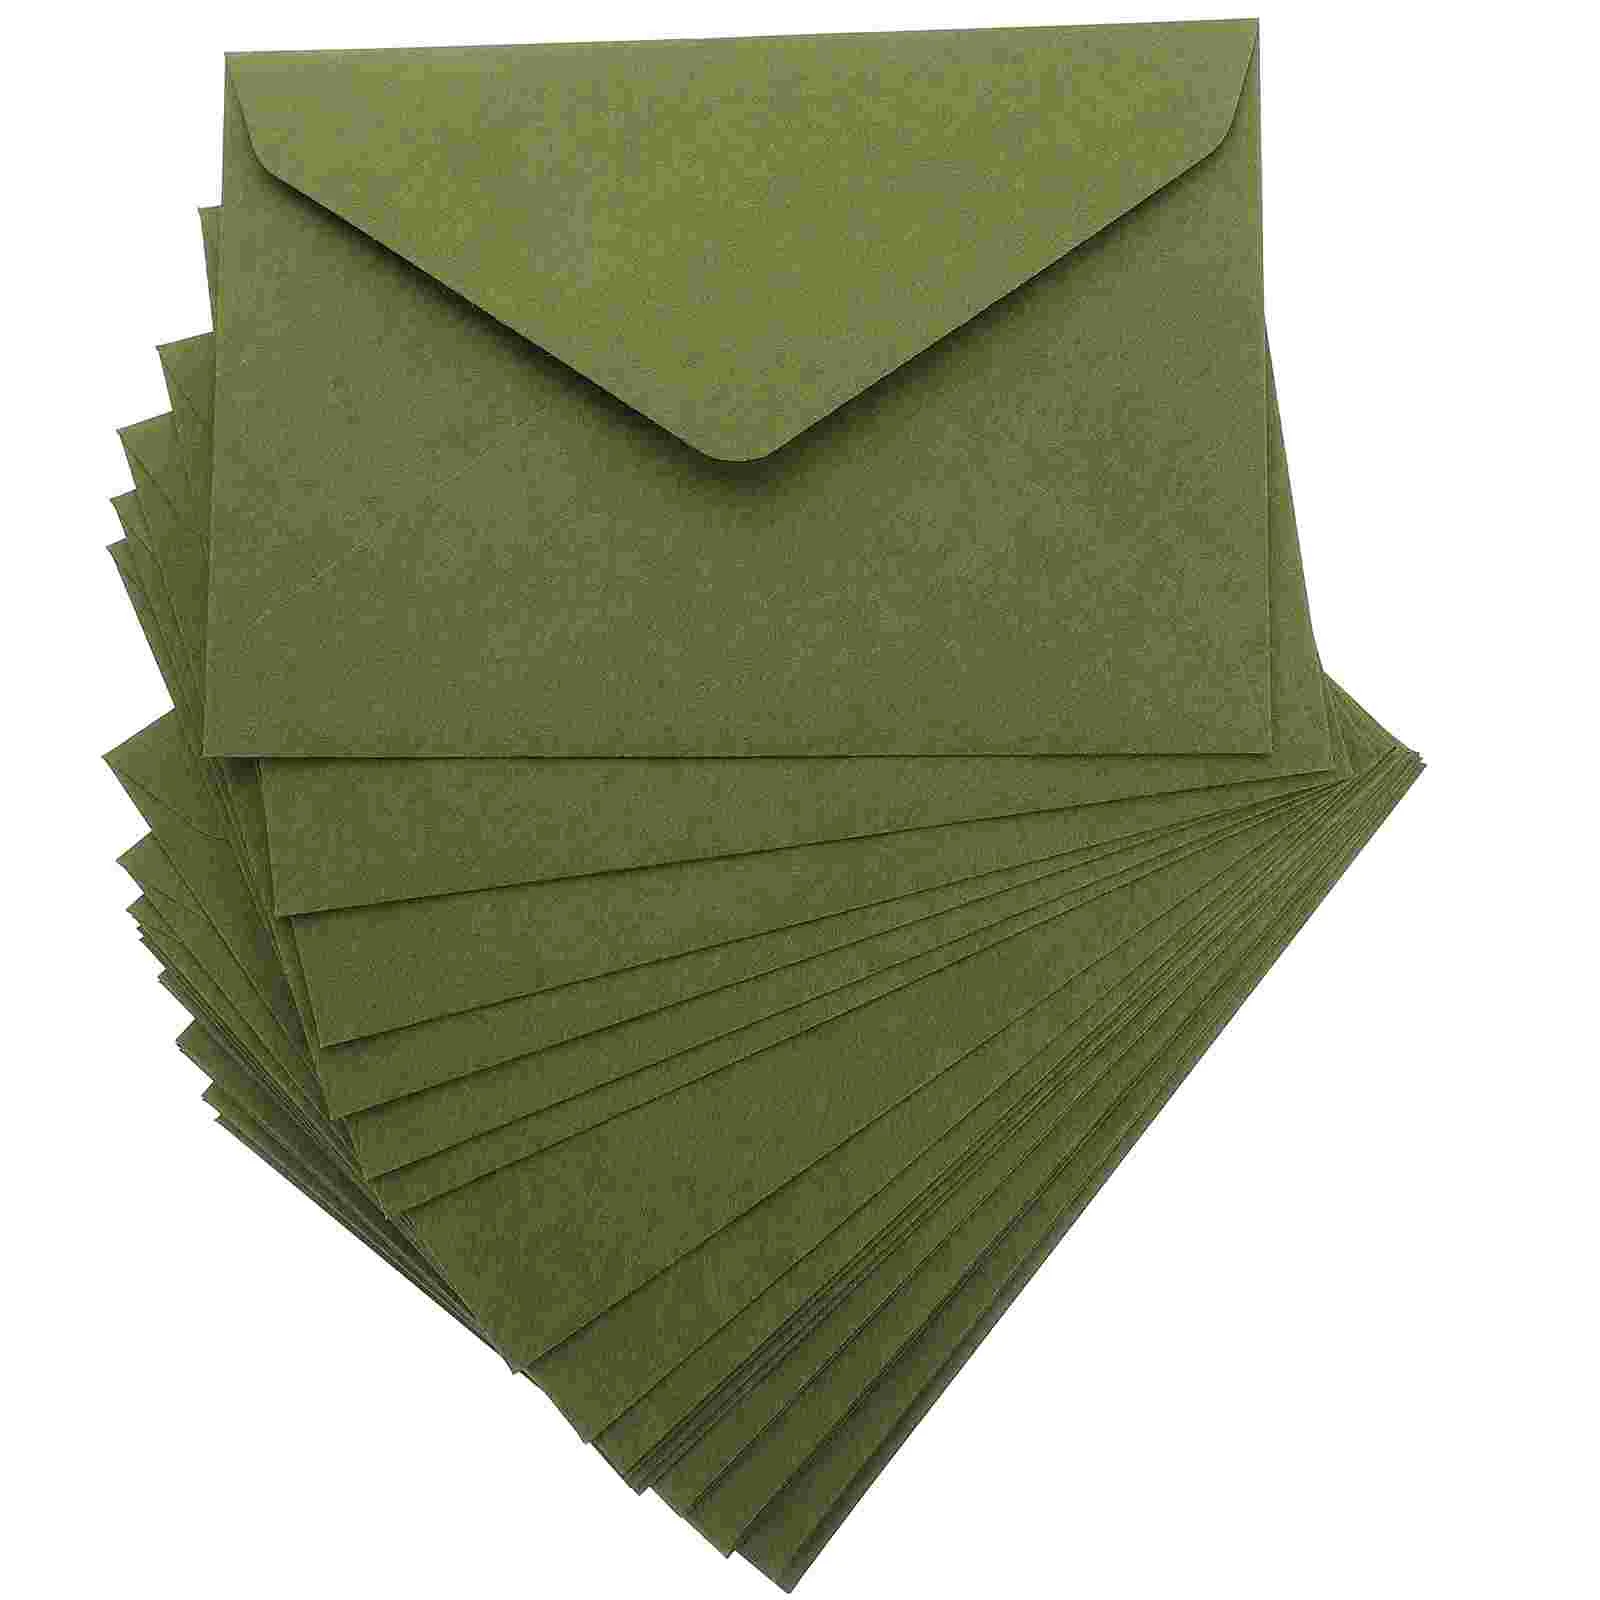 

40pcs Greeting Cards Wrapping Envelopes Invitation Cards Envelopes Multi-function Envelopes